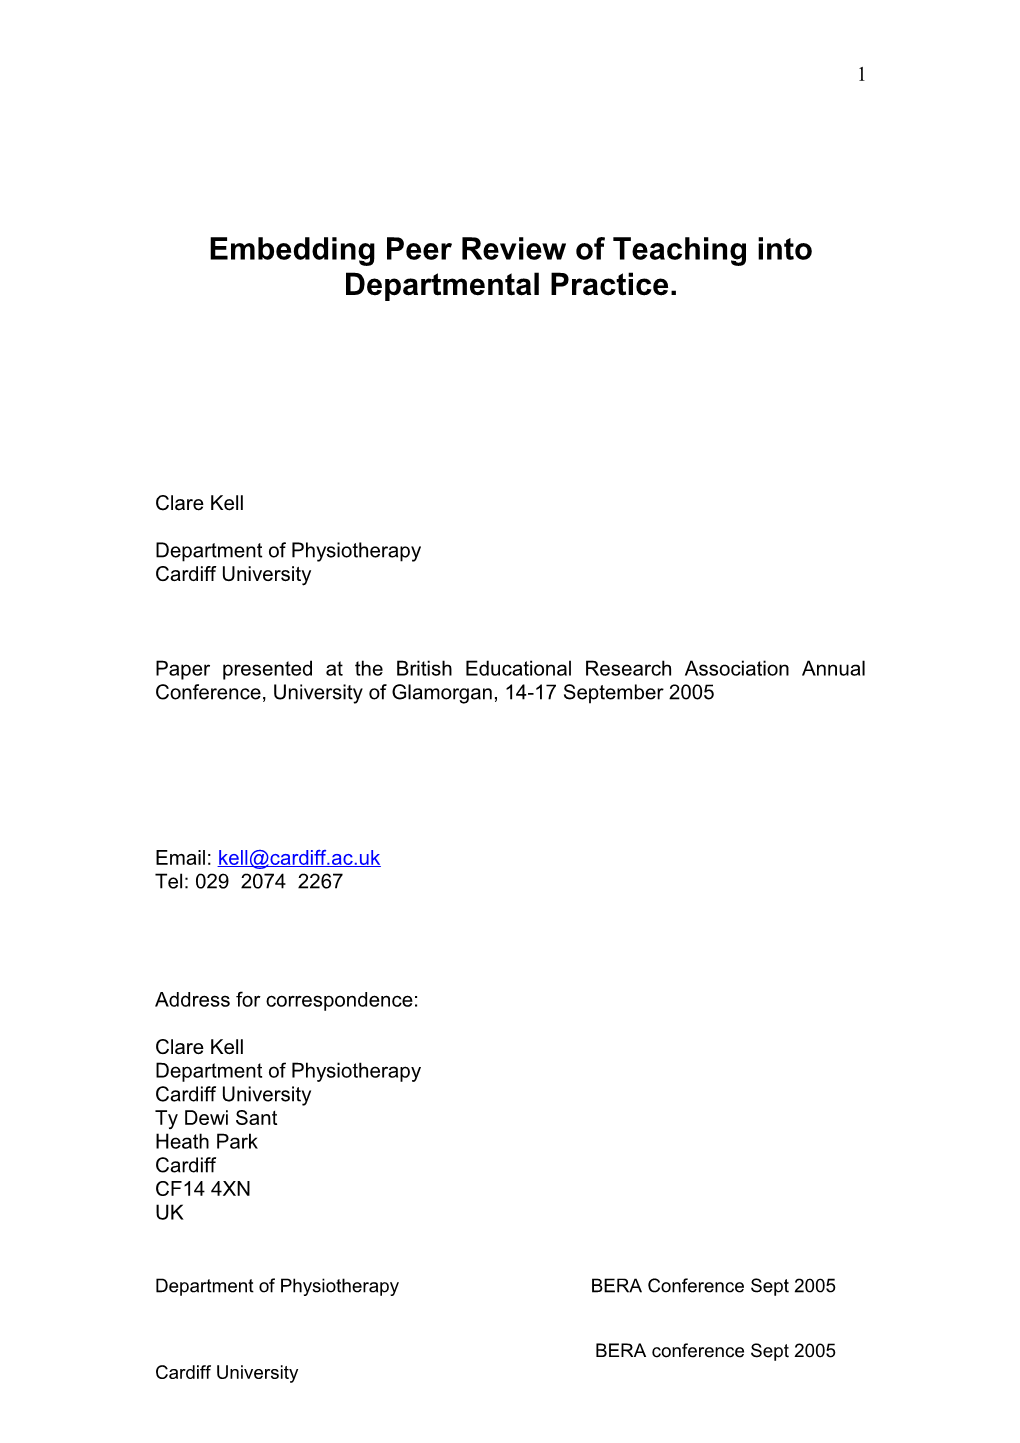 Embedding Peer Review of Teaching Into Departmental Practice